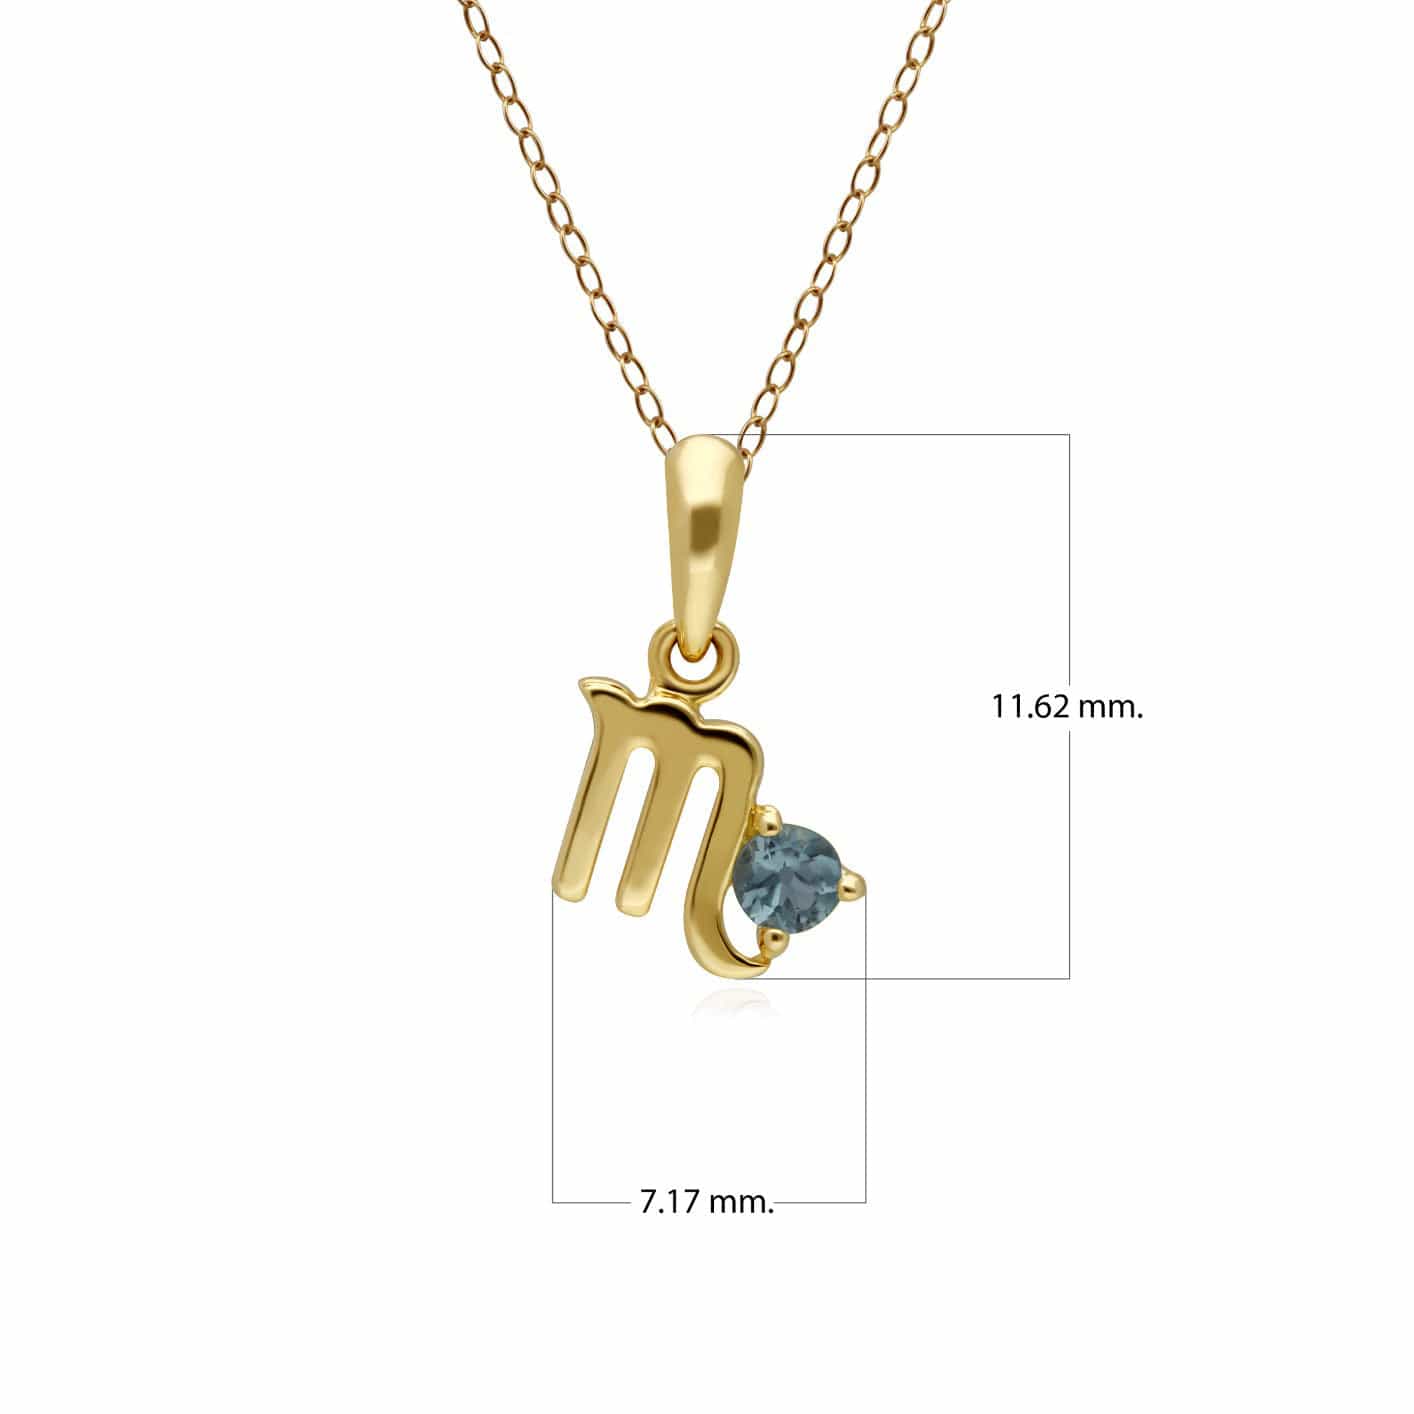 135P2002019 Blue Topaz Scorpio Zodiac Charm Necklace in 9ct Yellow Gold 3